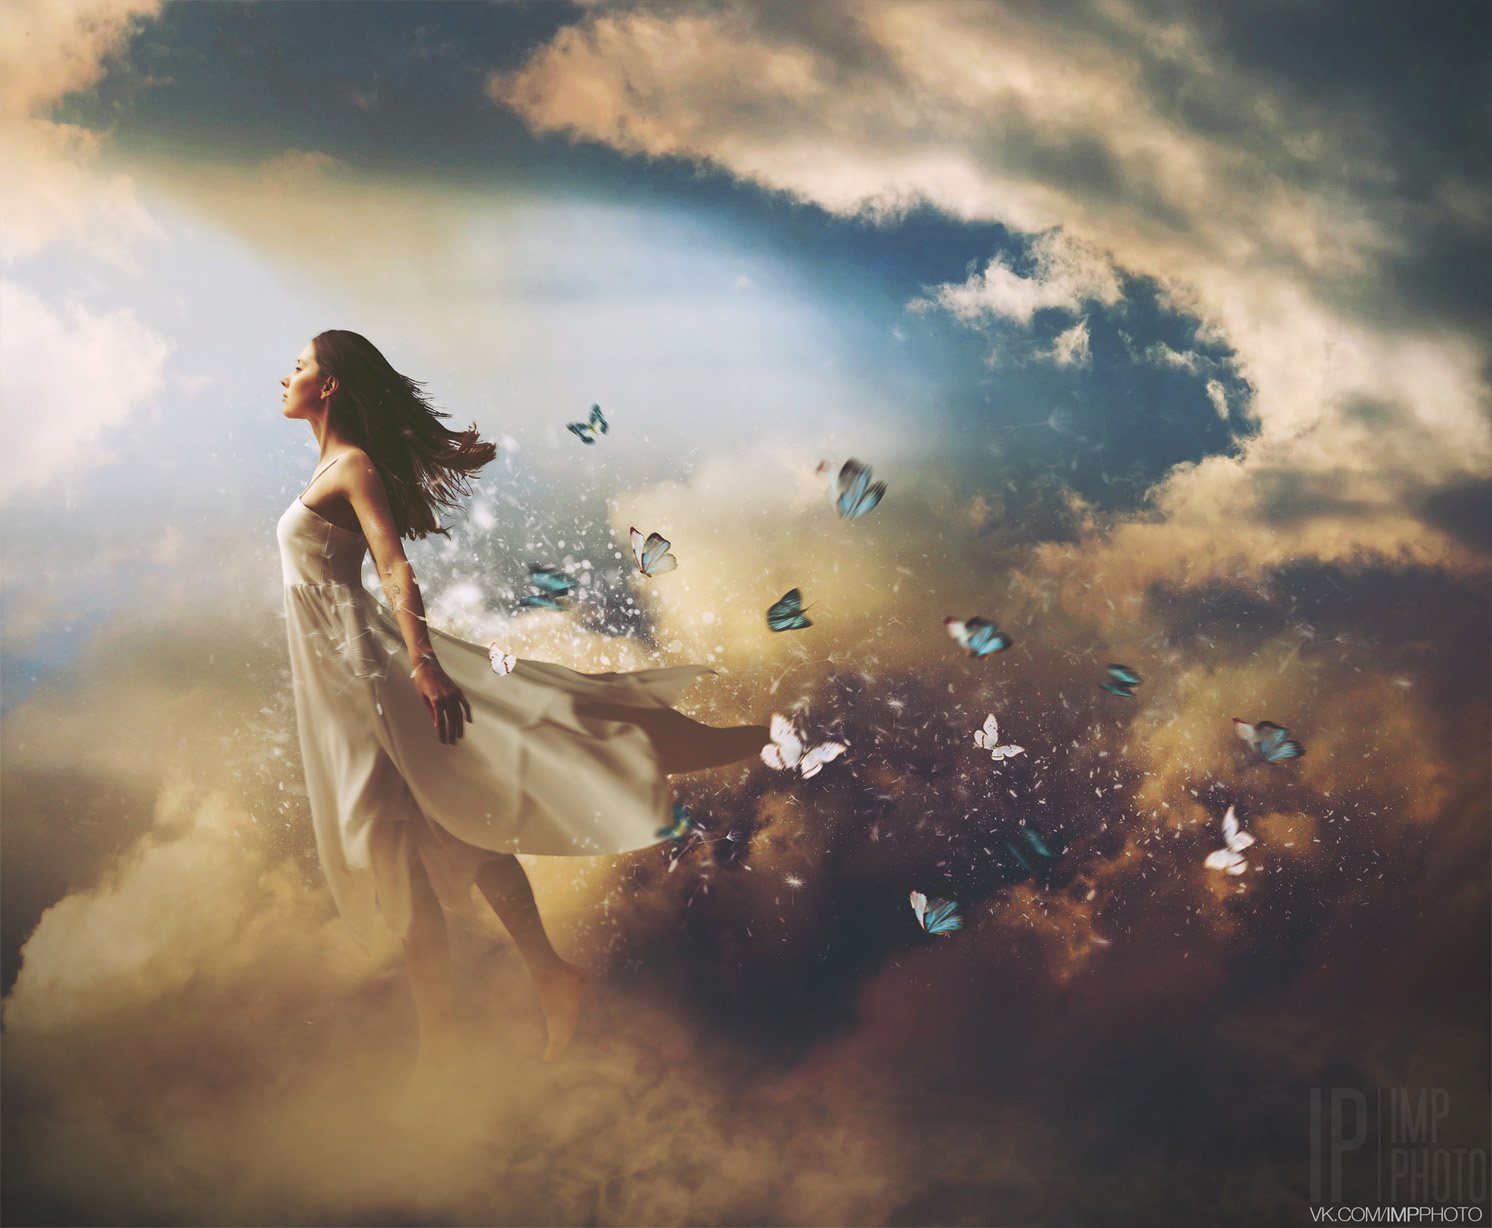 Clouds, Dream, Fairy tale, Girl, Sky, Woman, Артем Колесник